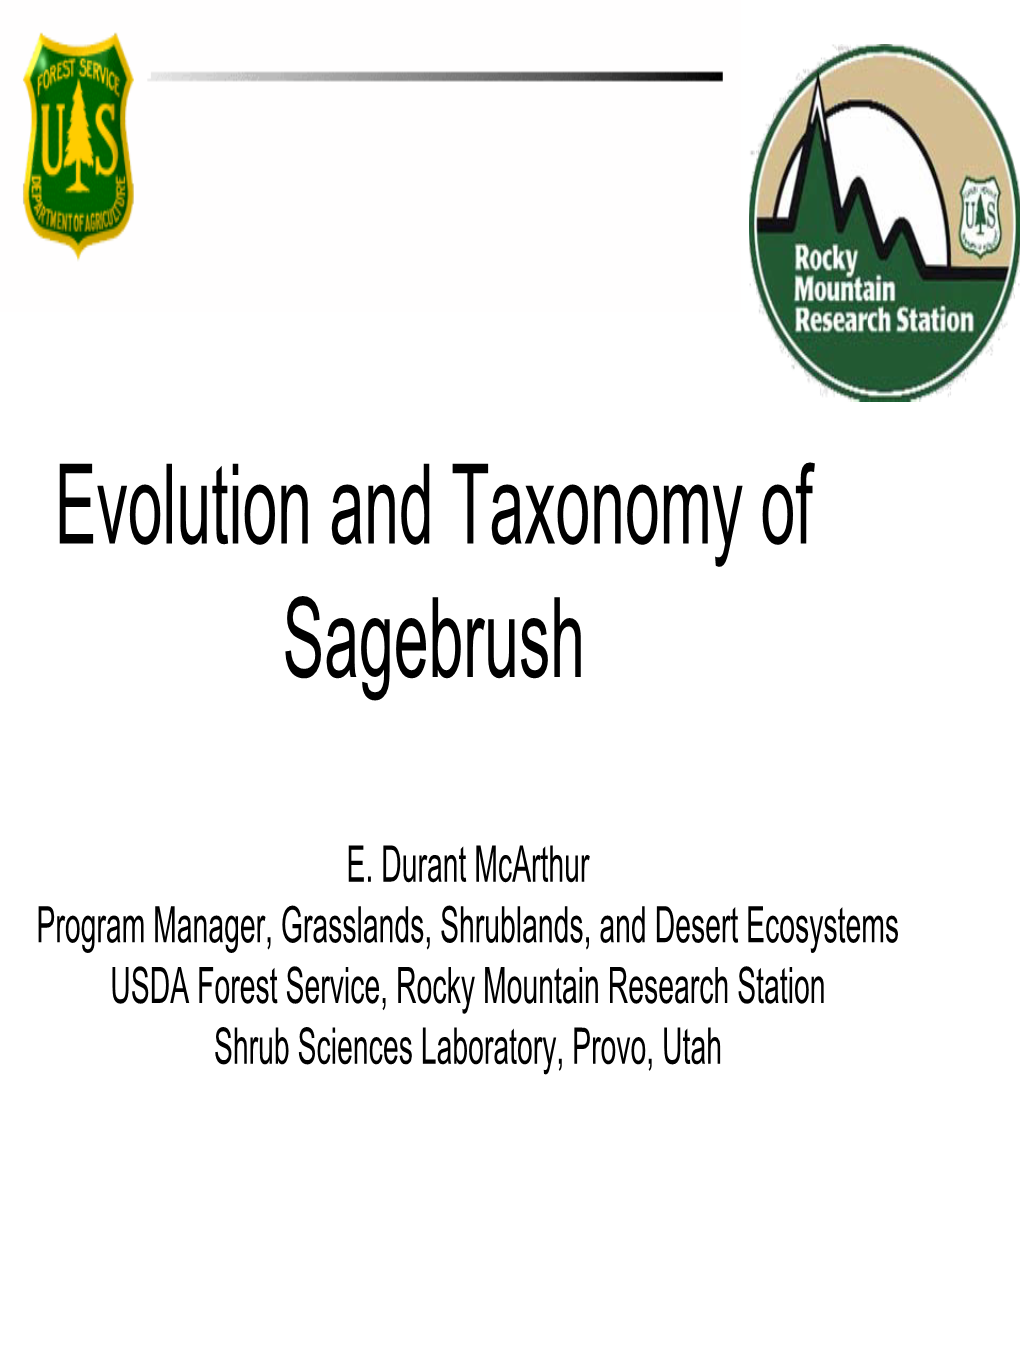 Evolution and Taxonomy of Sagebrush (Pdf)